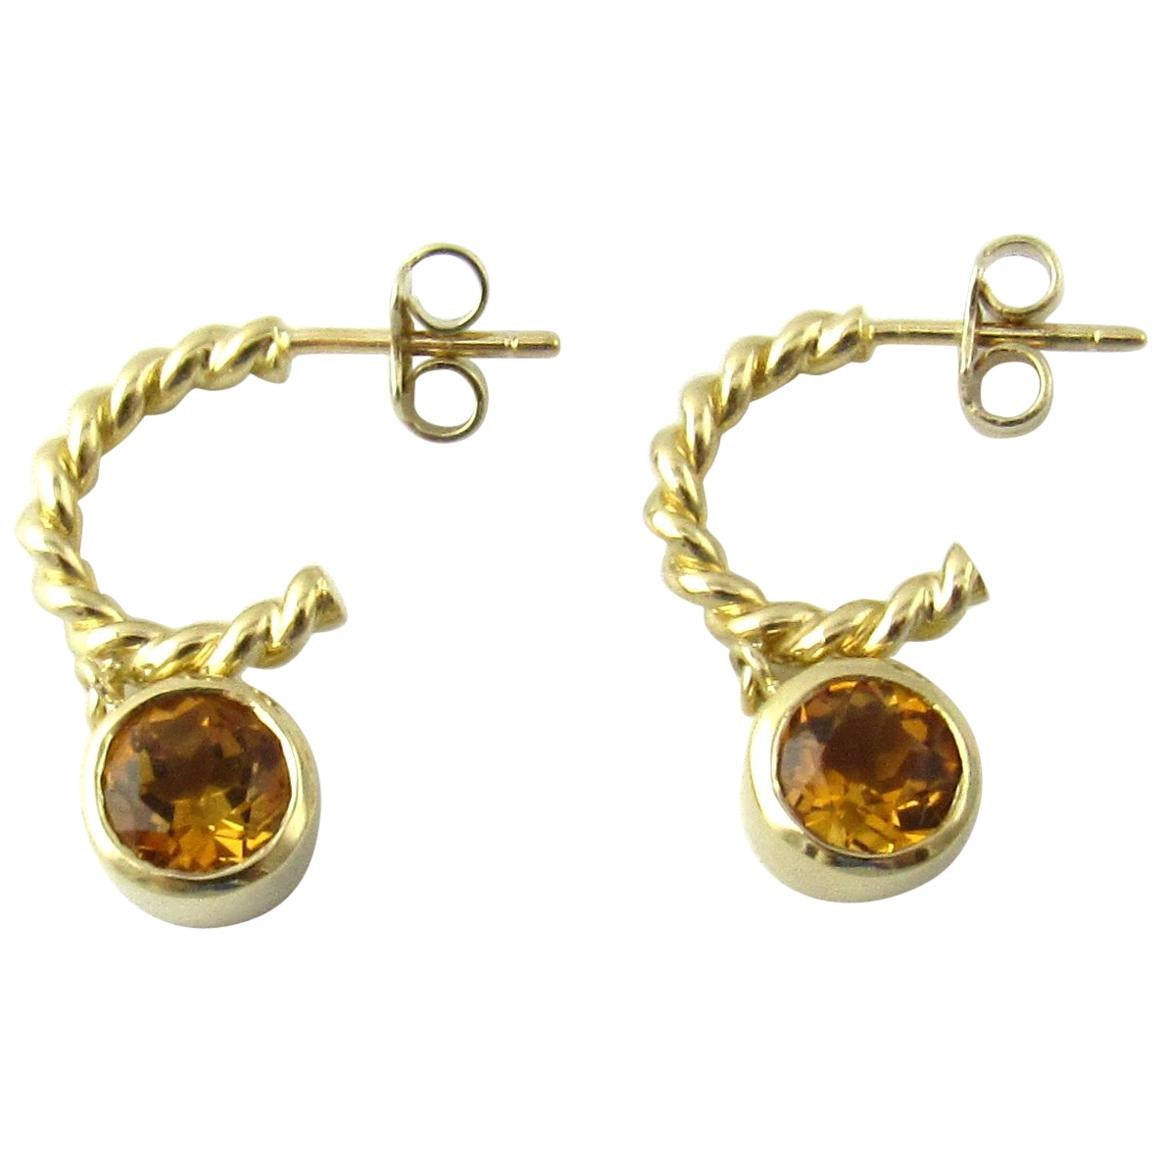 Tiffany & Co. 18 Karat Yellow Gold Twisted Rope Hoop Dangle Citrine Earrings